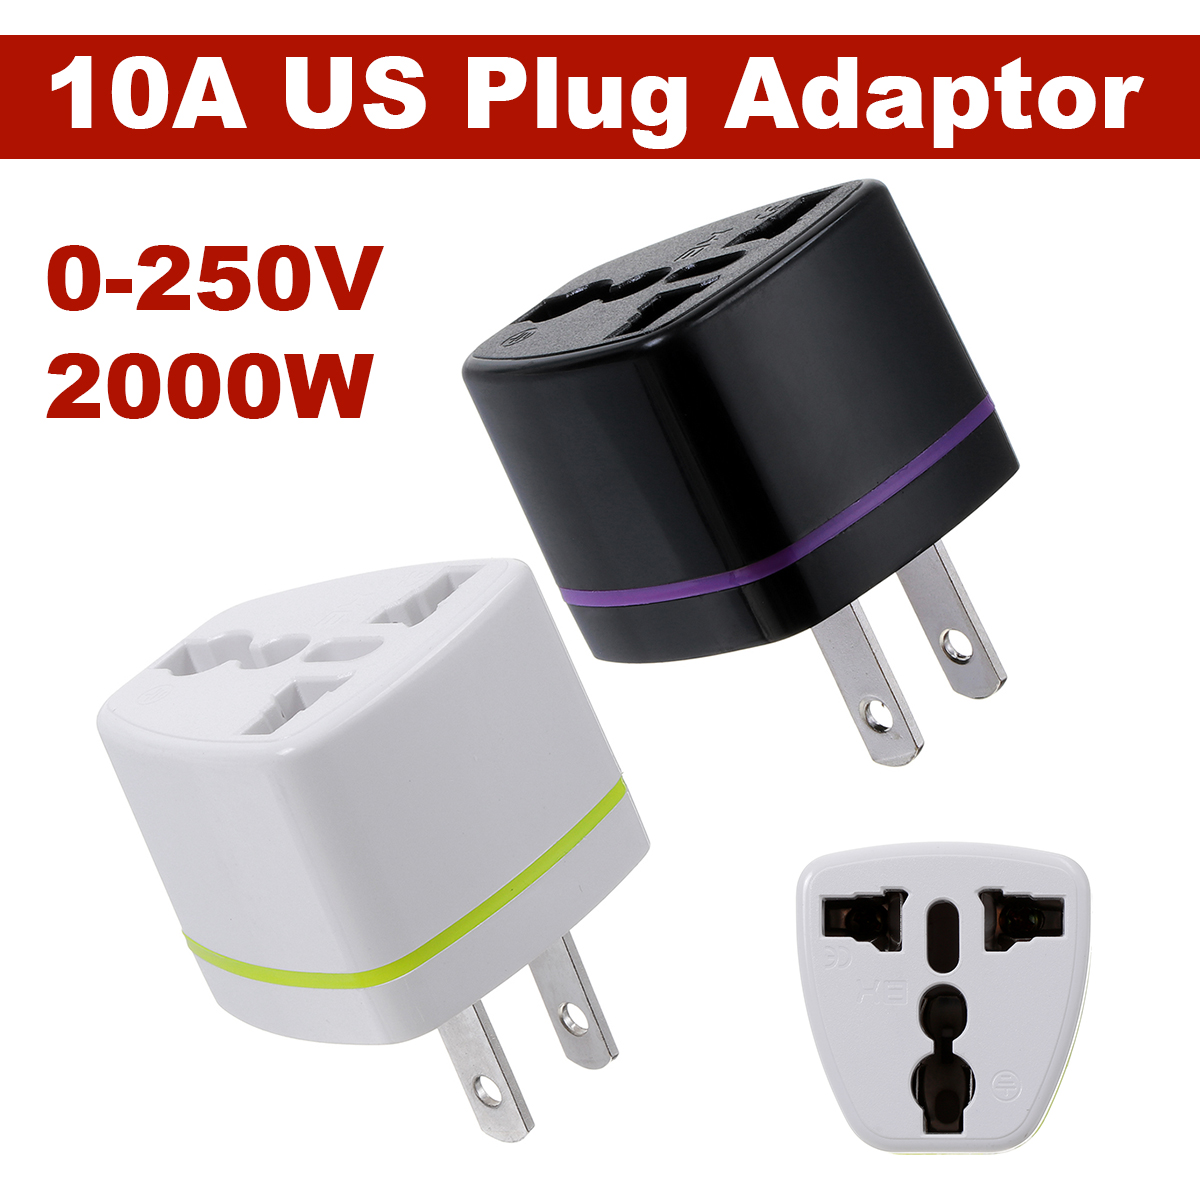 US-Plug-Adaptor-Standard-Conversion-Wall-Plug-Power-Socket-Converter-0-250V-10A-1810676-1